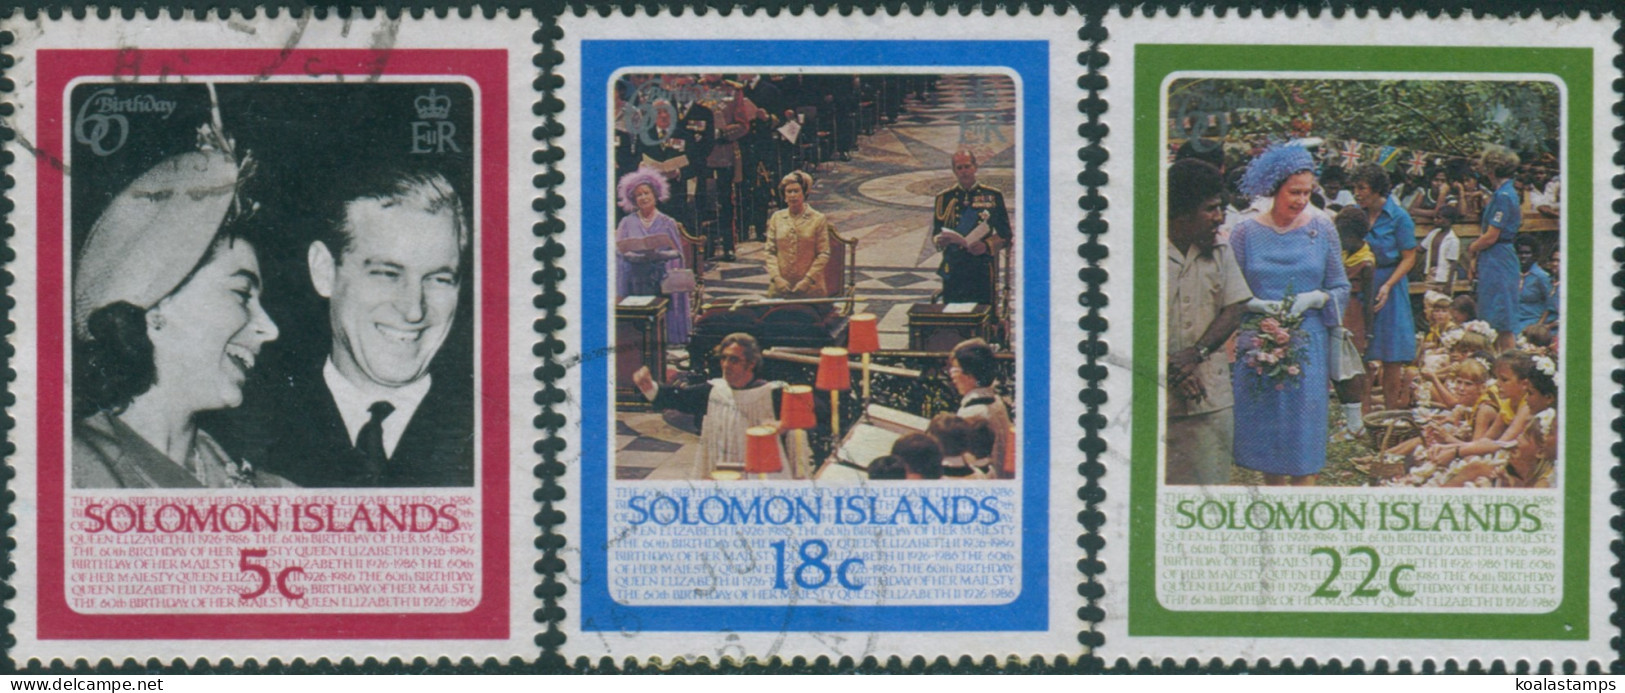 Solomon Islands 1986 SG562-566 QEII Birthday Set Part FU - Salomon (Iles 1978-...)